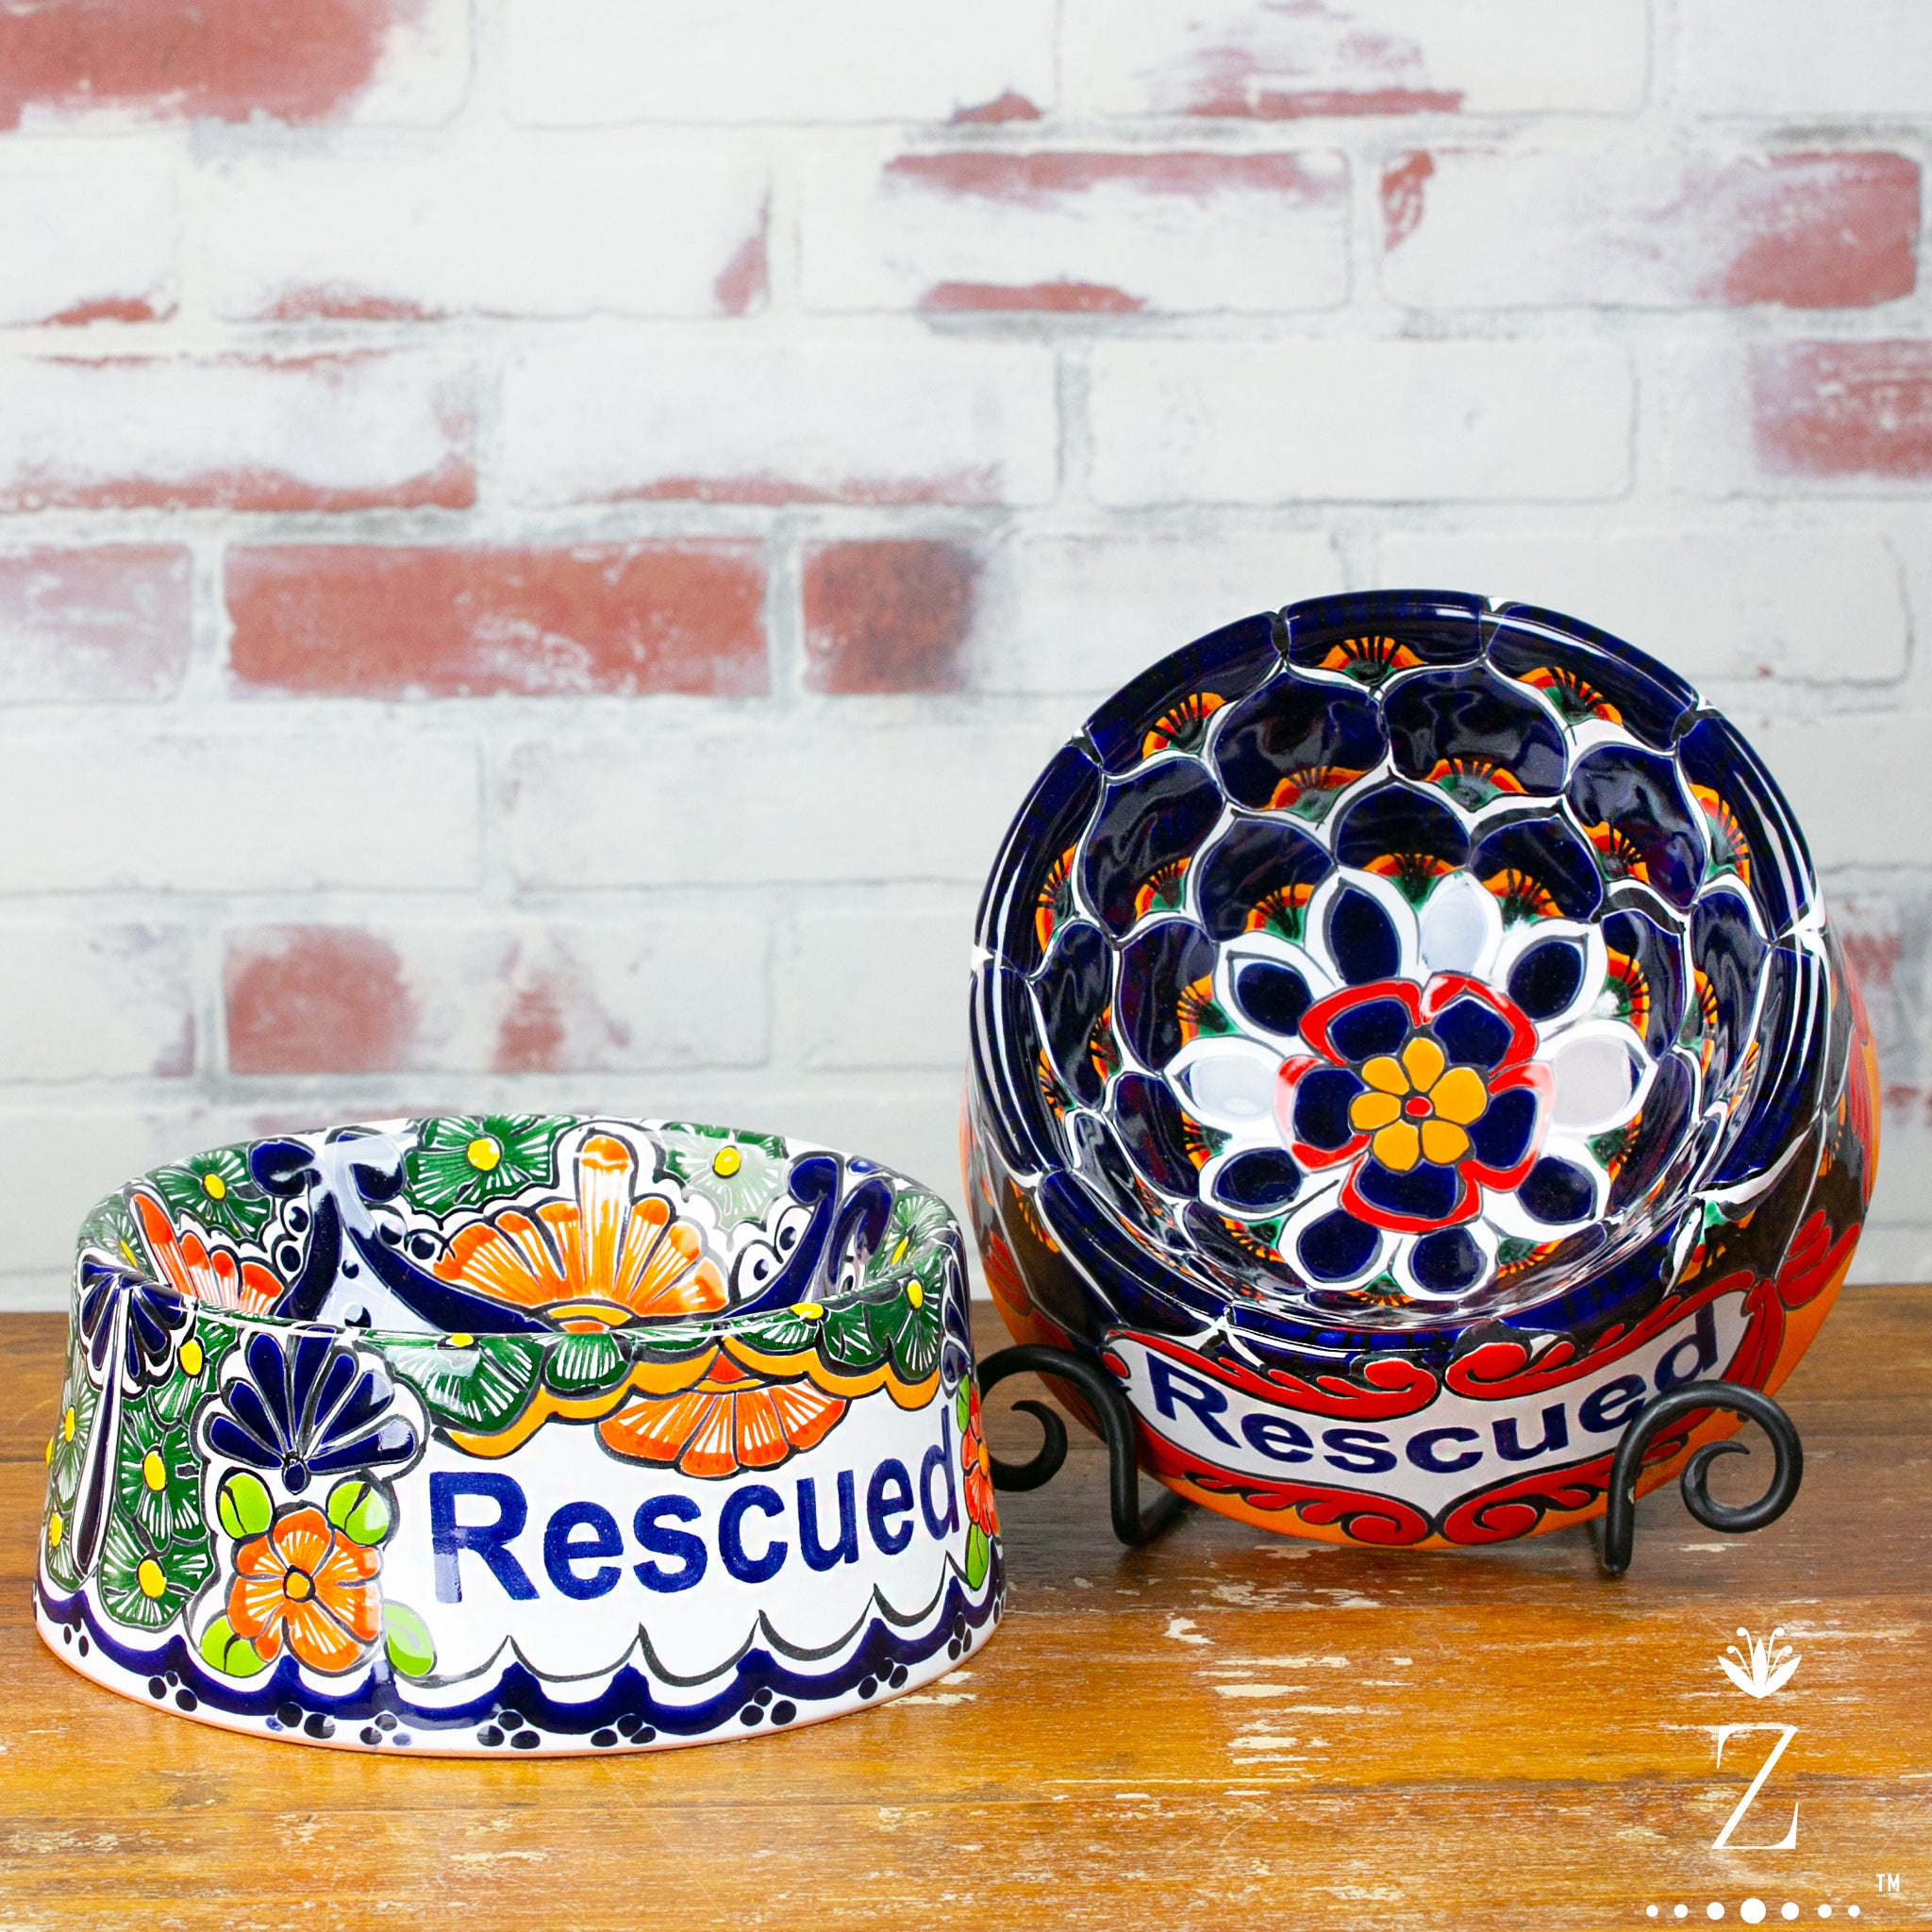 Rescued Pet Bowls, Handmade Talavera Ceramic Pet Bowls